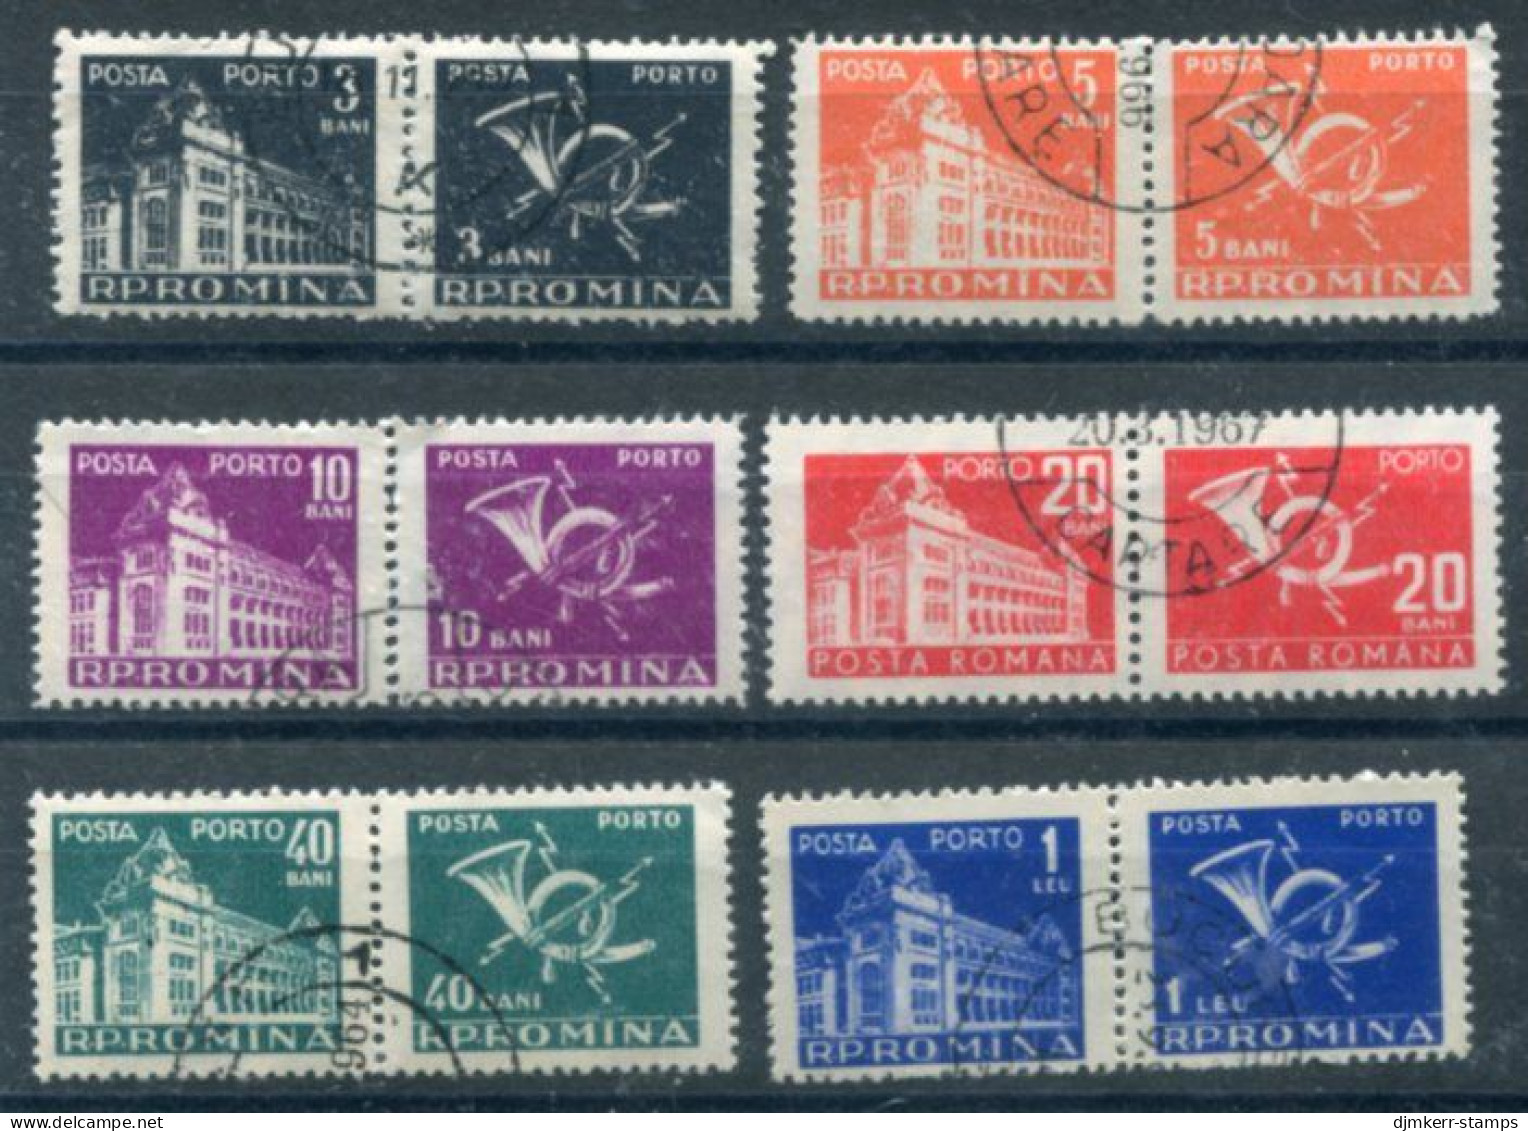 ROMANIA 1957 Postage Due Set Used. Michel Porto101-06 - Postage Due